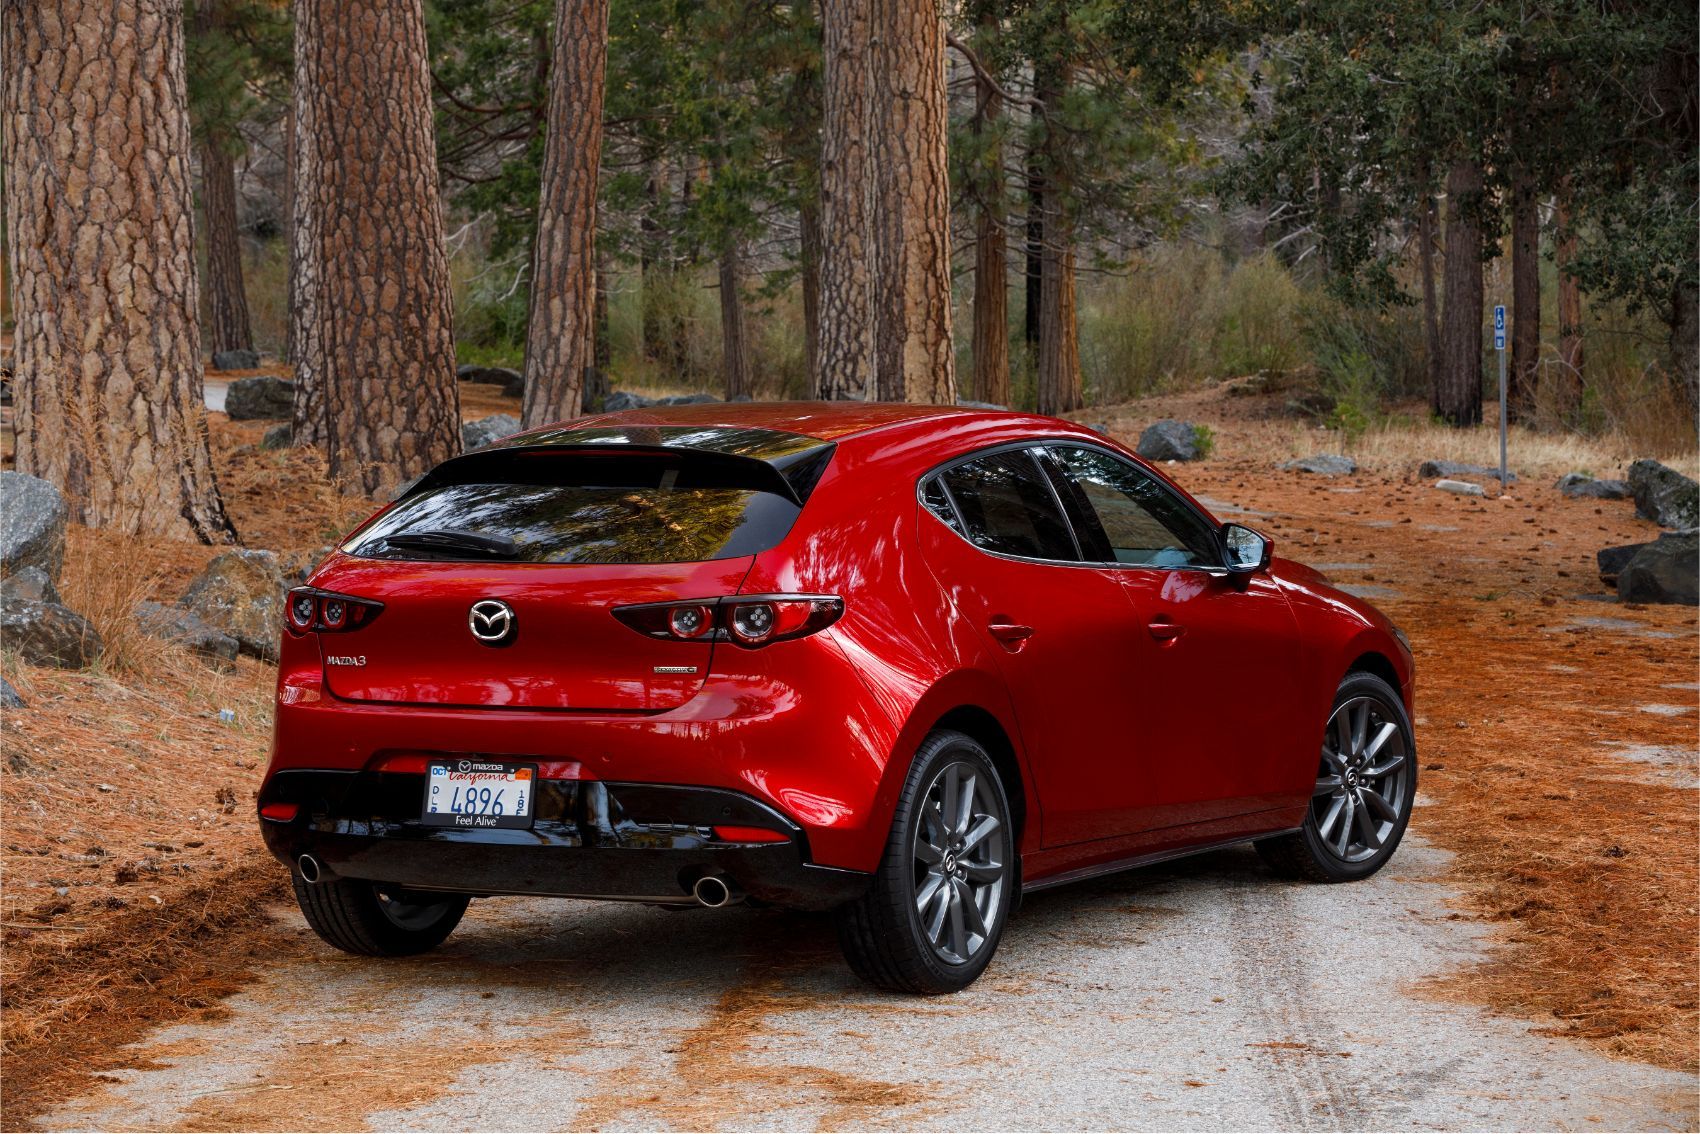 2020 Mazda3 Hatchback & Sedan: A Quick But Detailed Overview